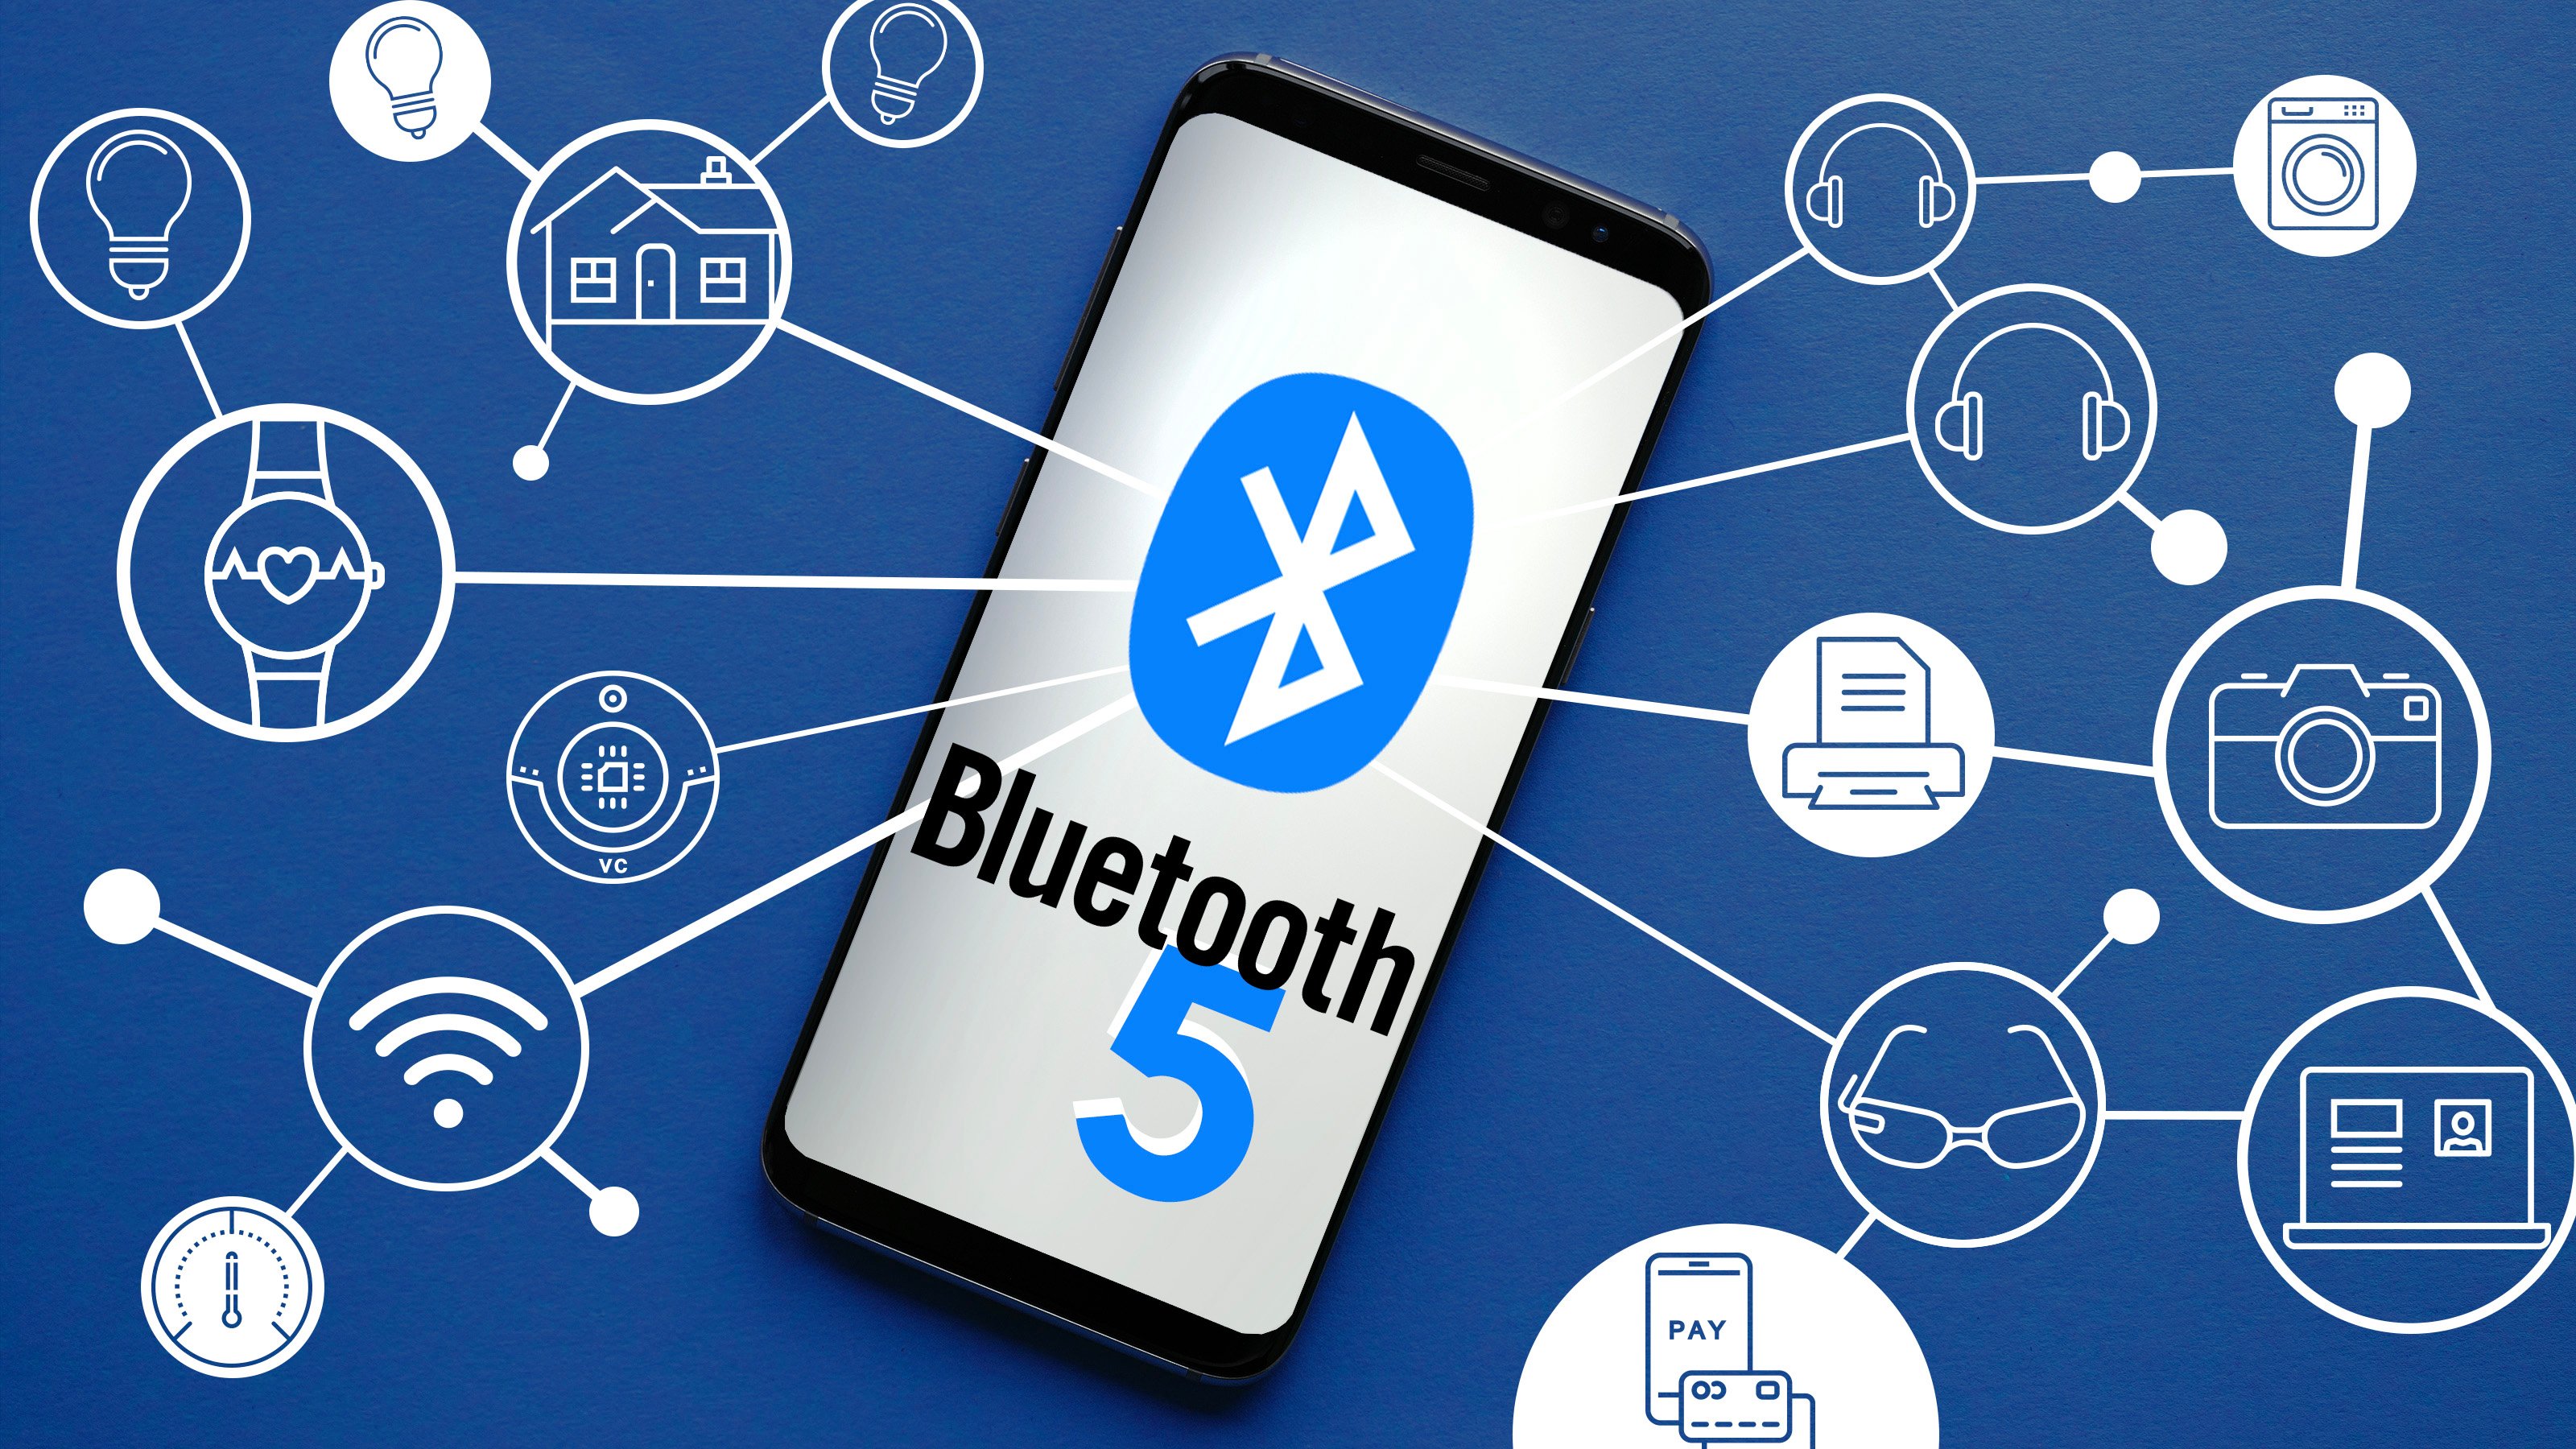 Principali caratteristiche di Bluetooth 5